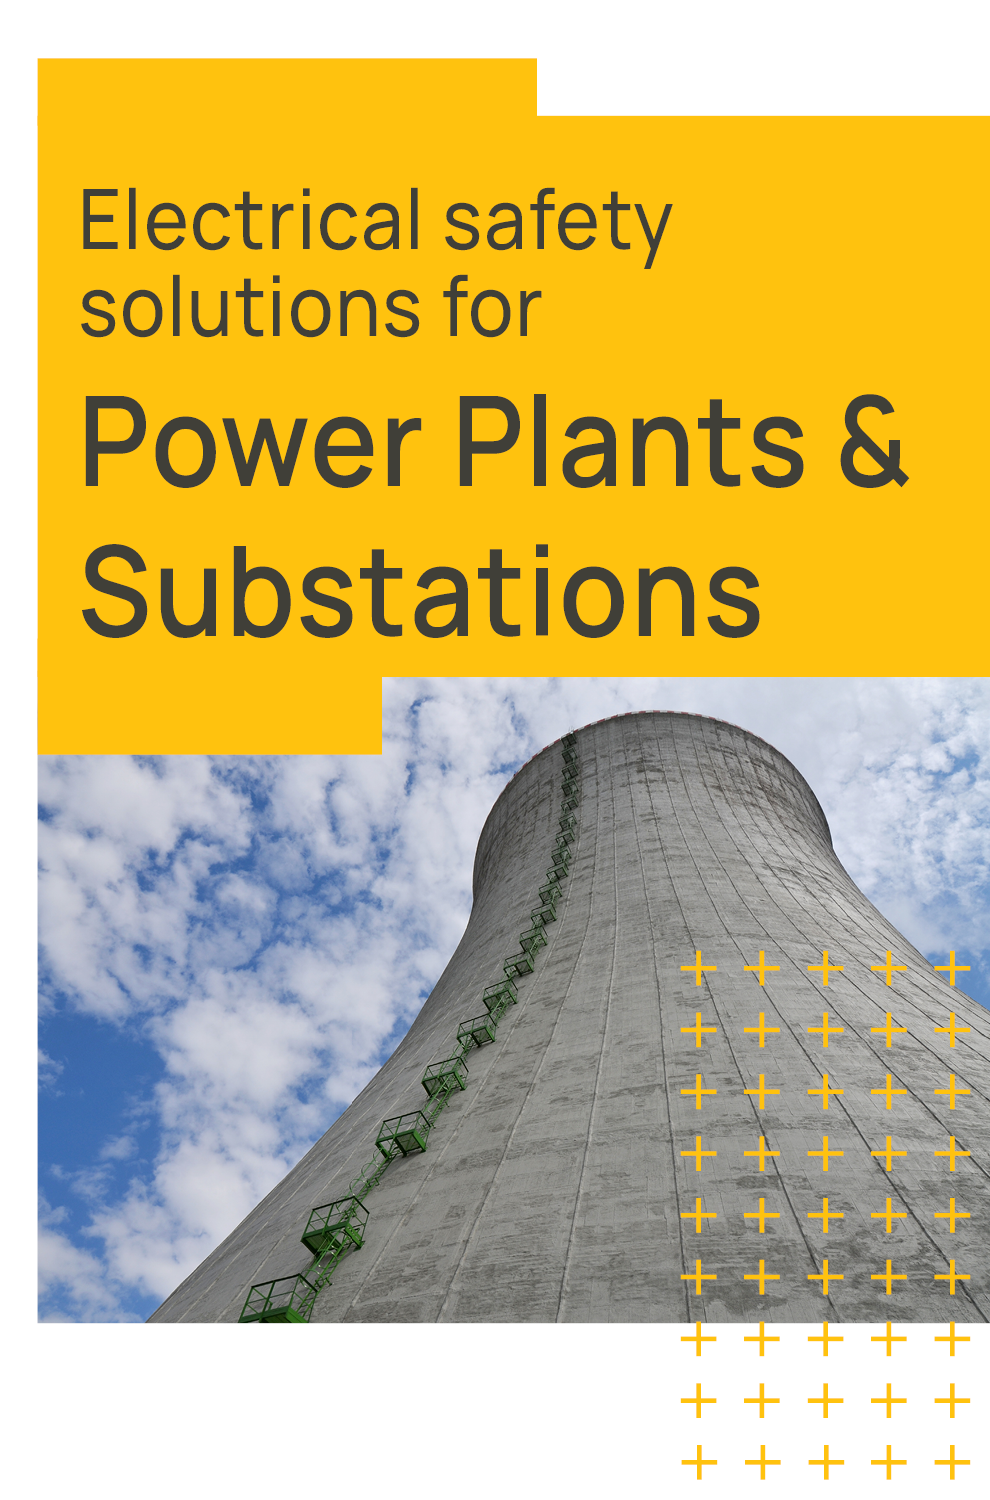 Power Plants & Substation Brochure